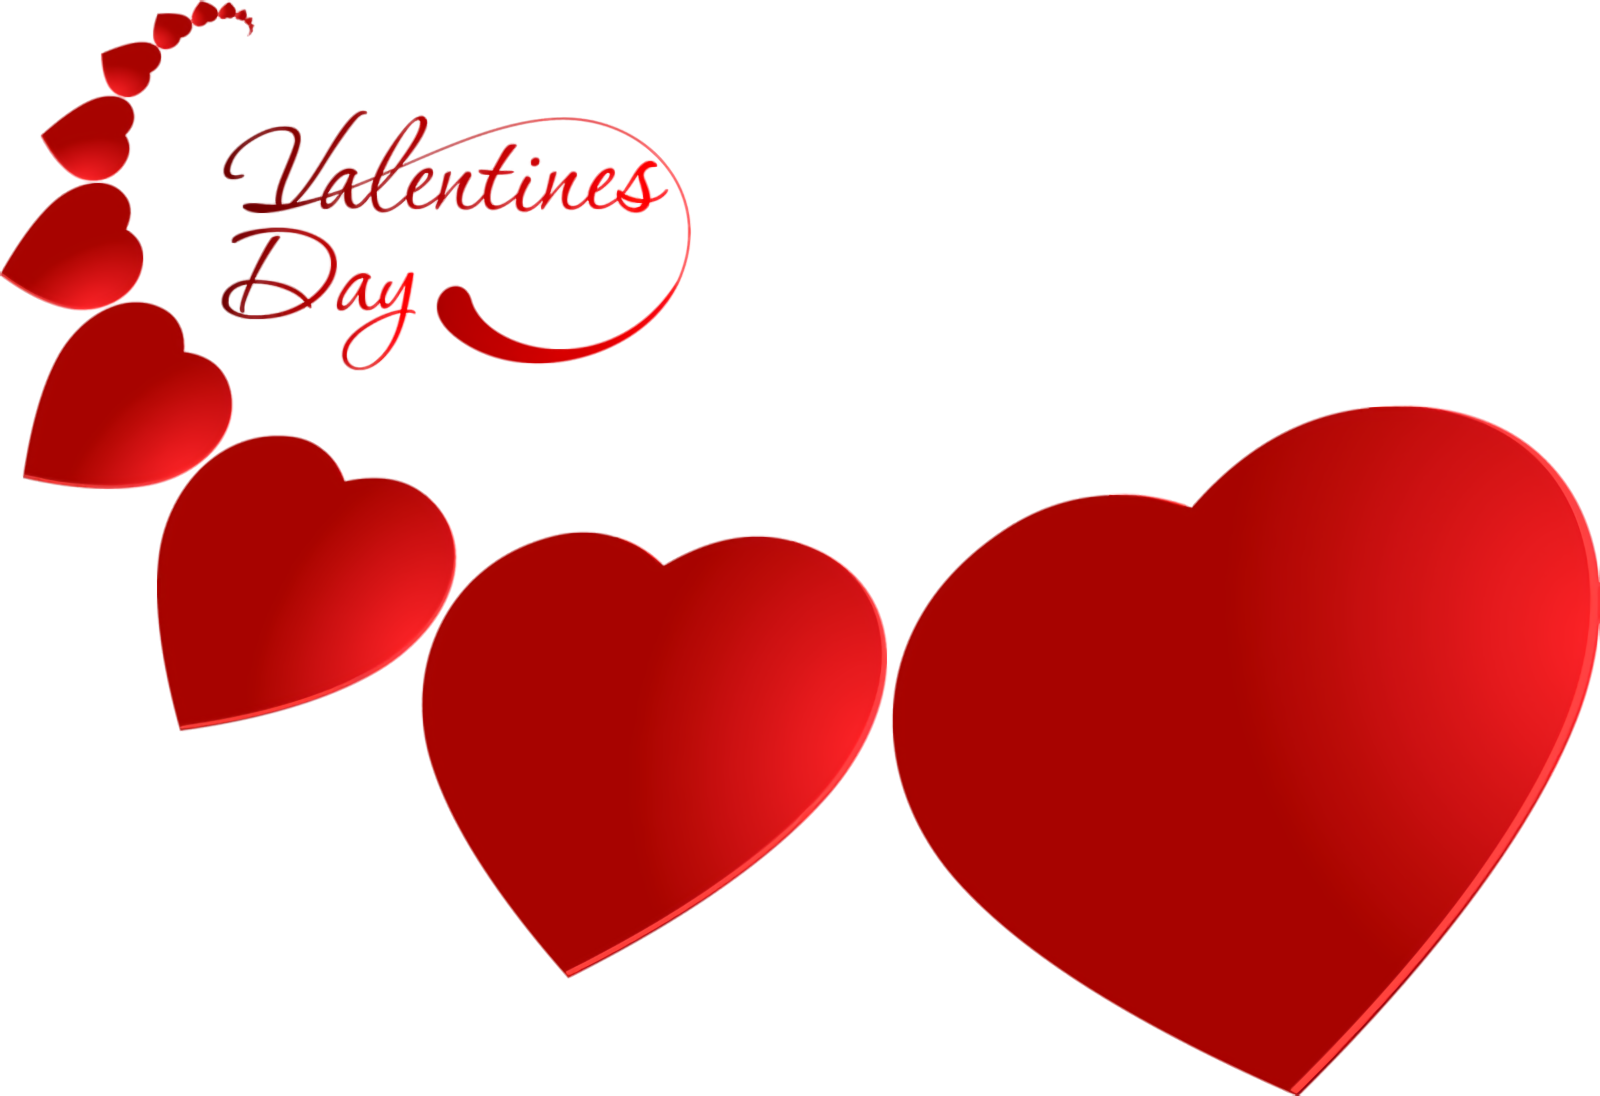 transparent-valentines-day-heart-5e17b4f2c8d8d4.7482820415786119548227.png